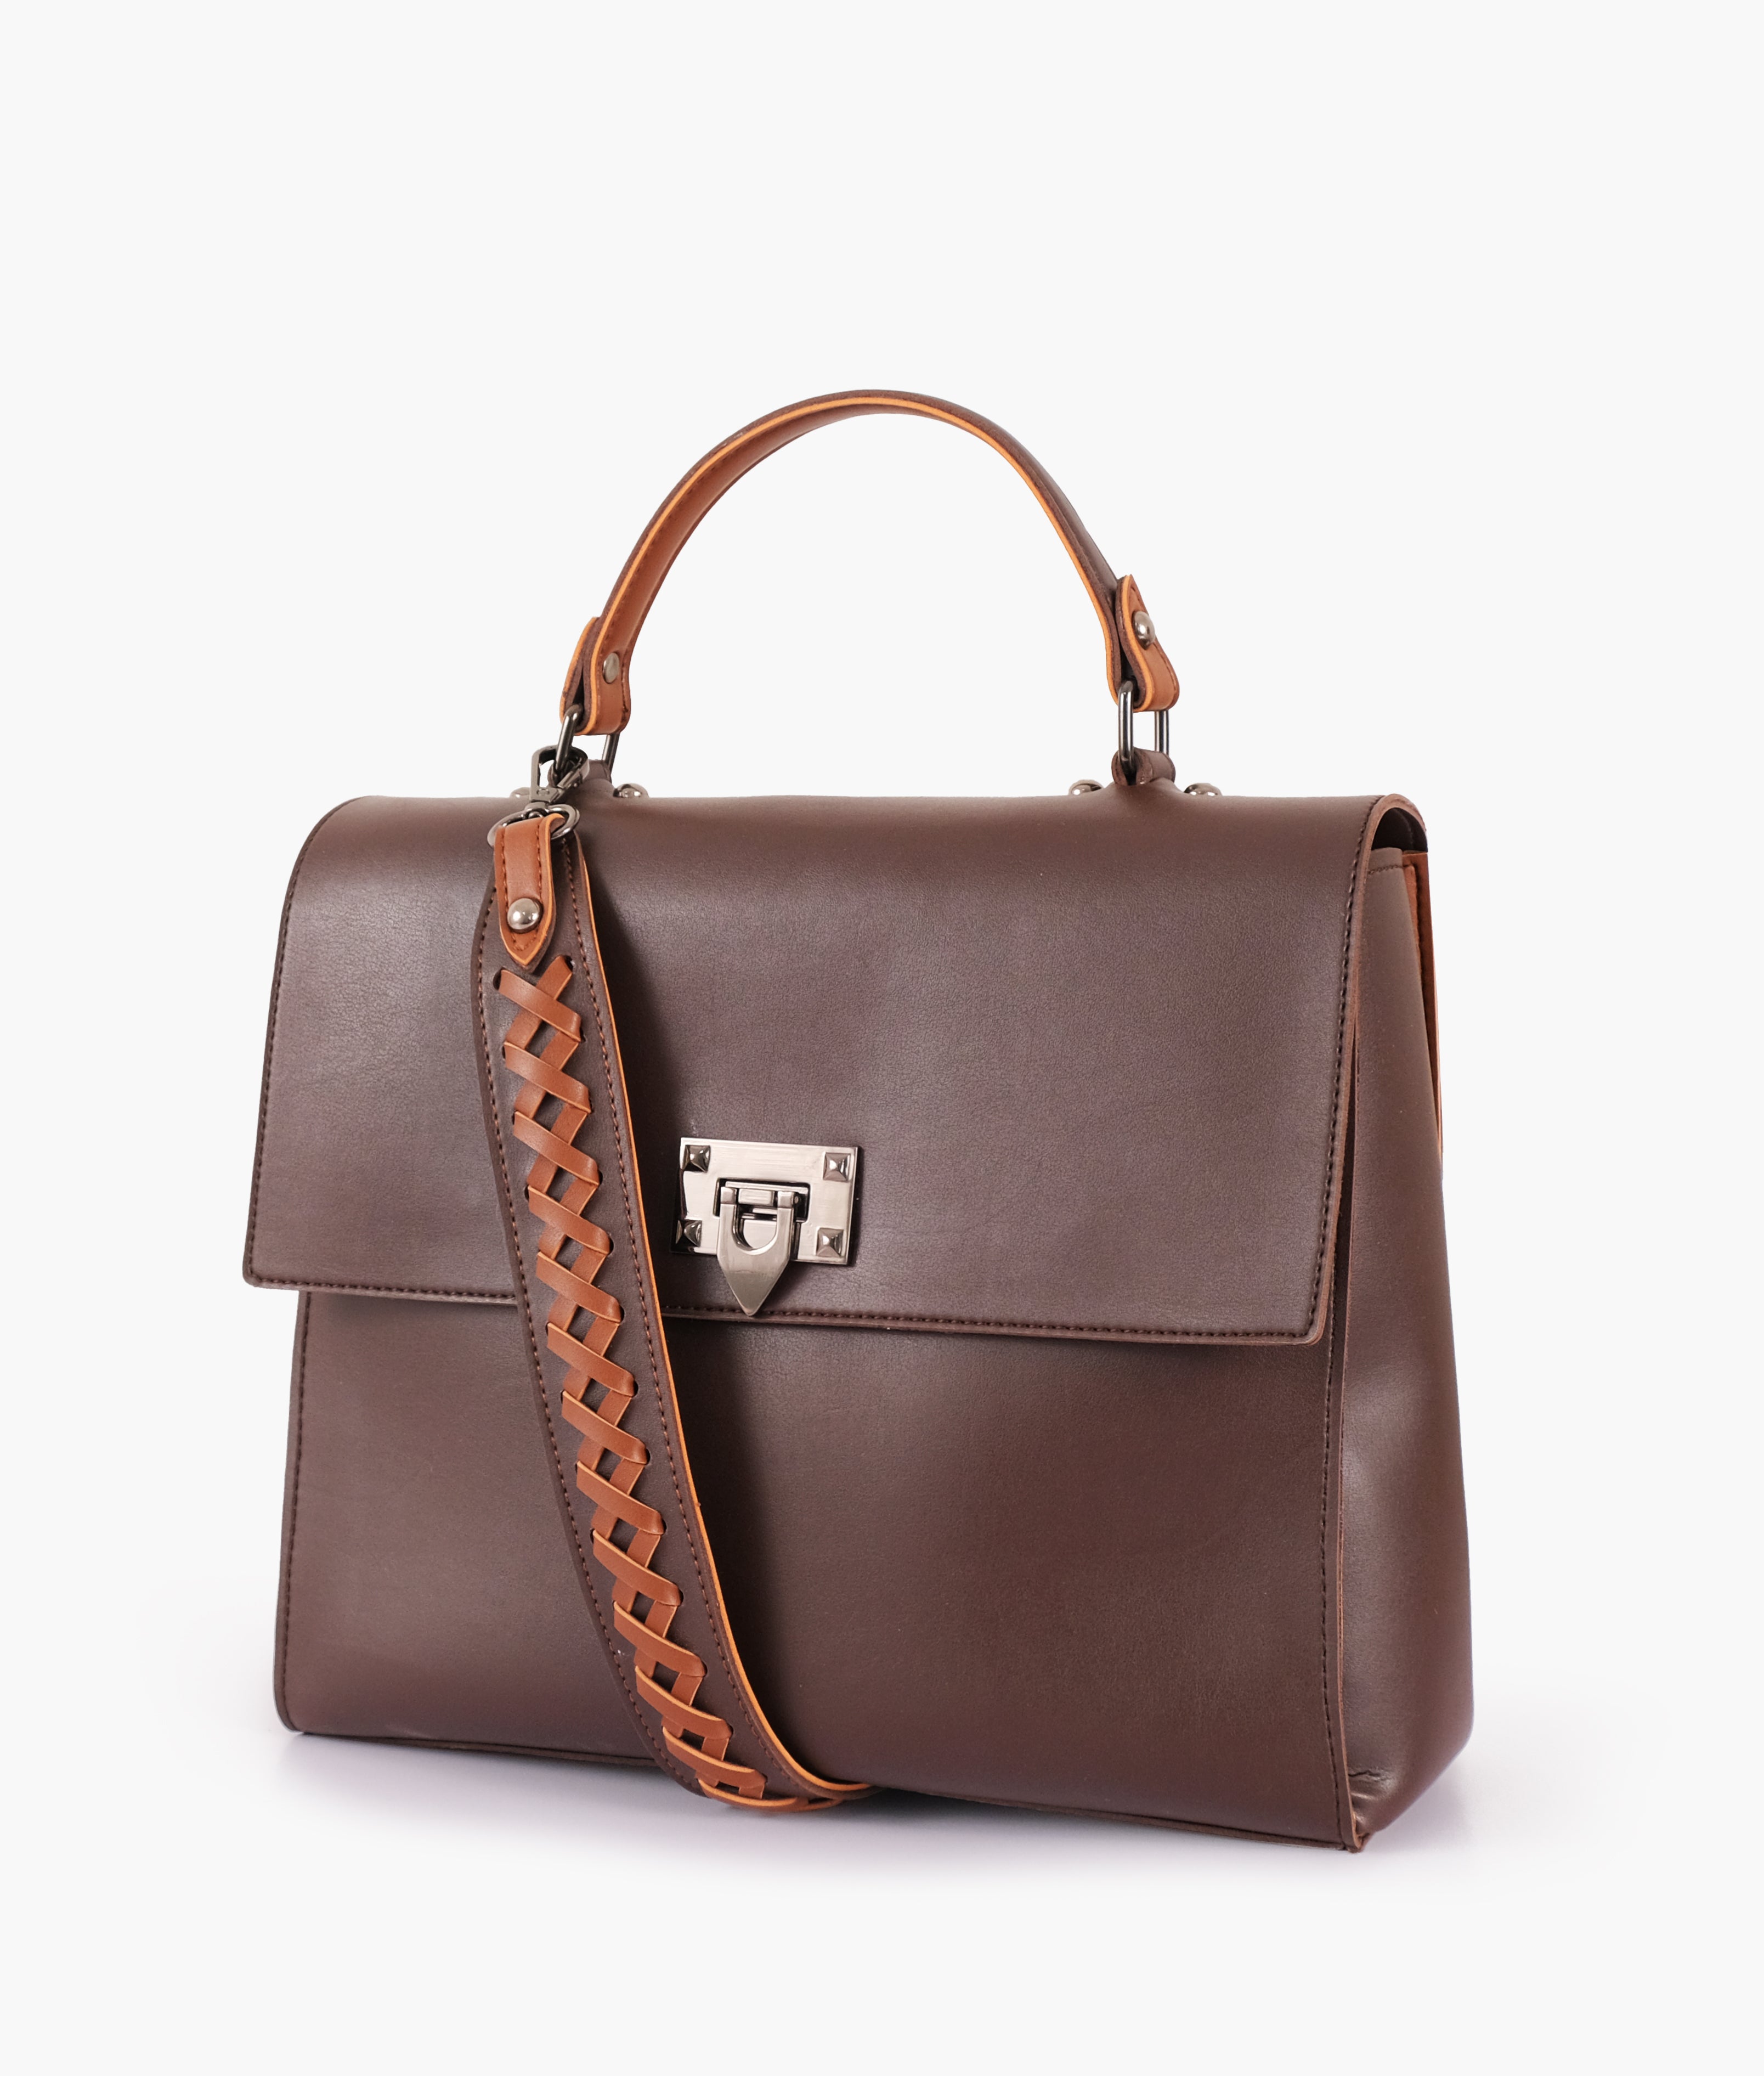 Dark brown flap-over top-handle bag